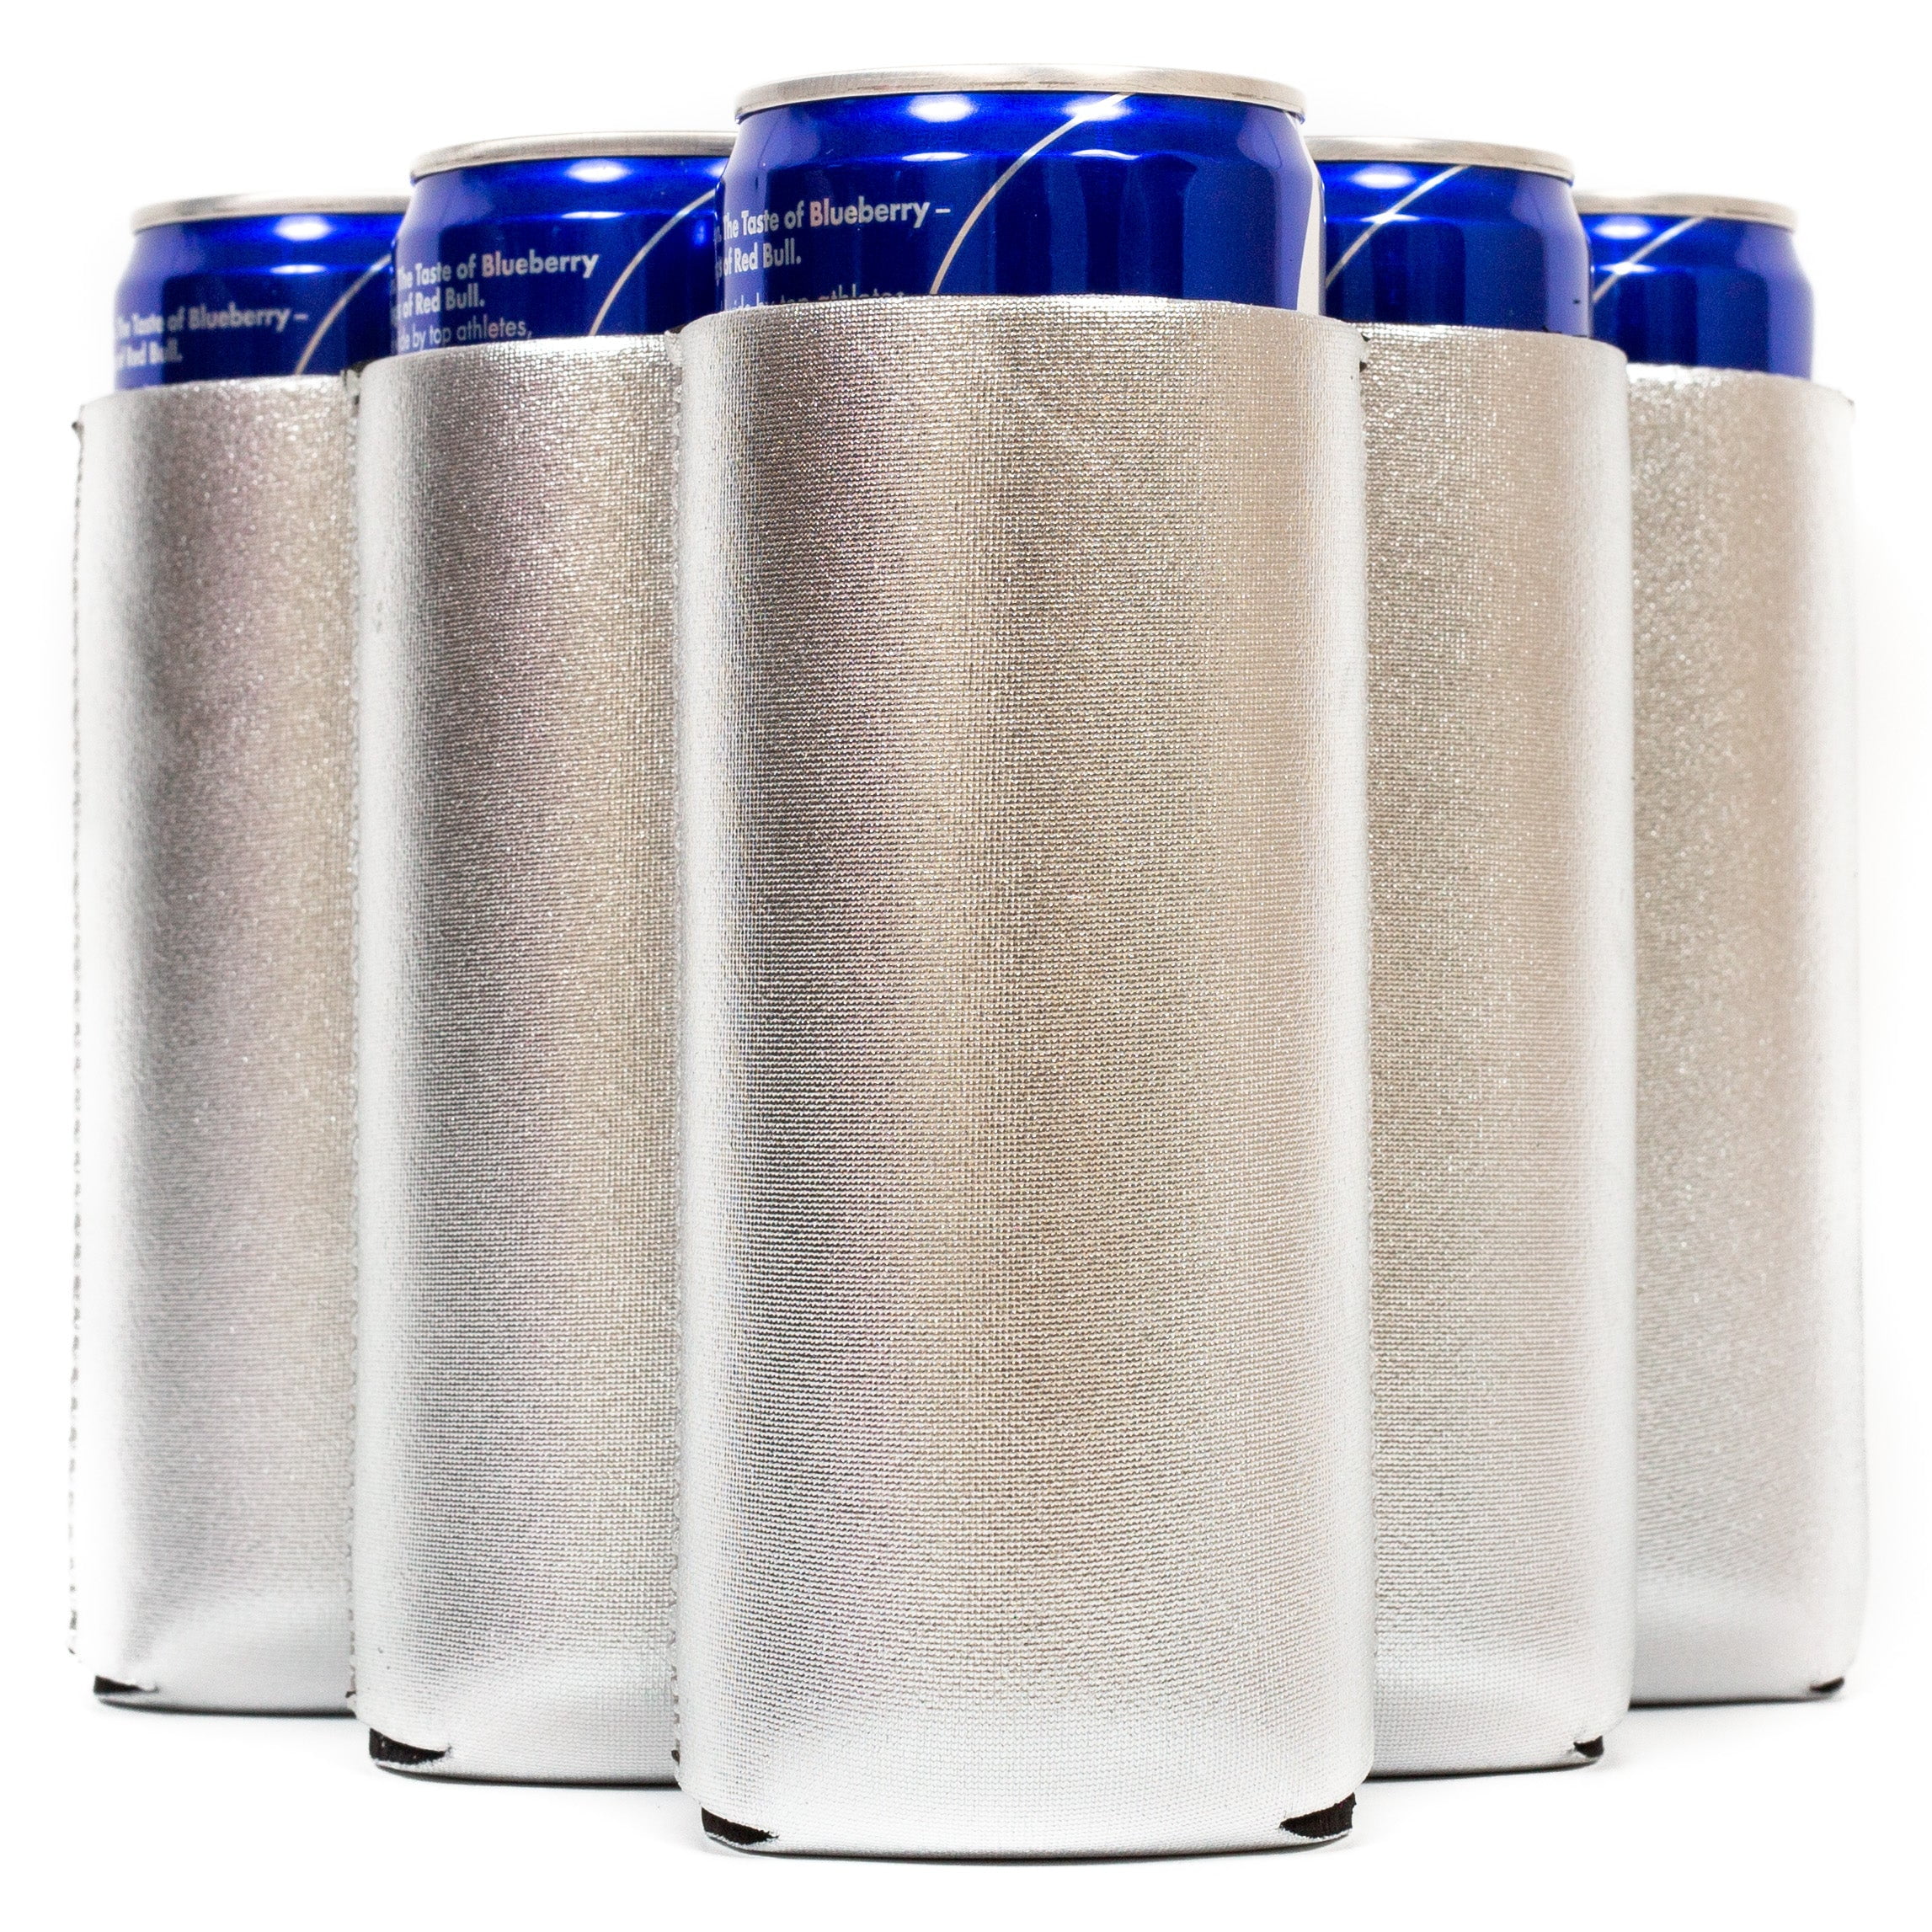 Branded Beverage Coolers & Drink Sleeves Corkcicle Slim Can Cooler